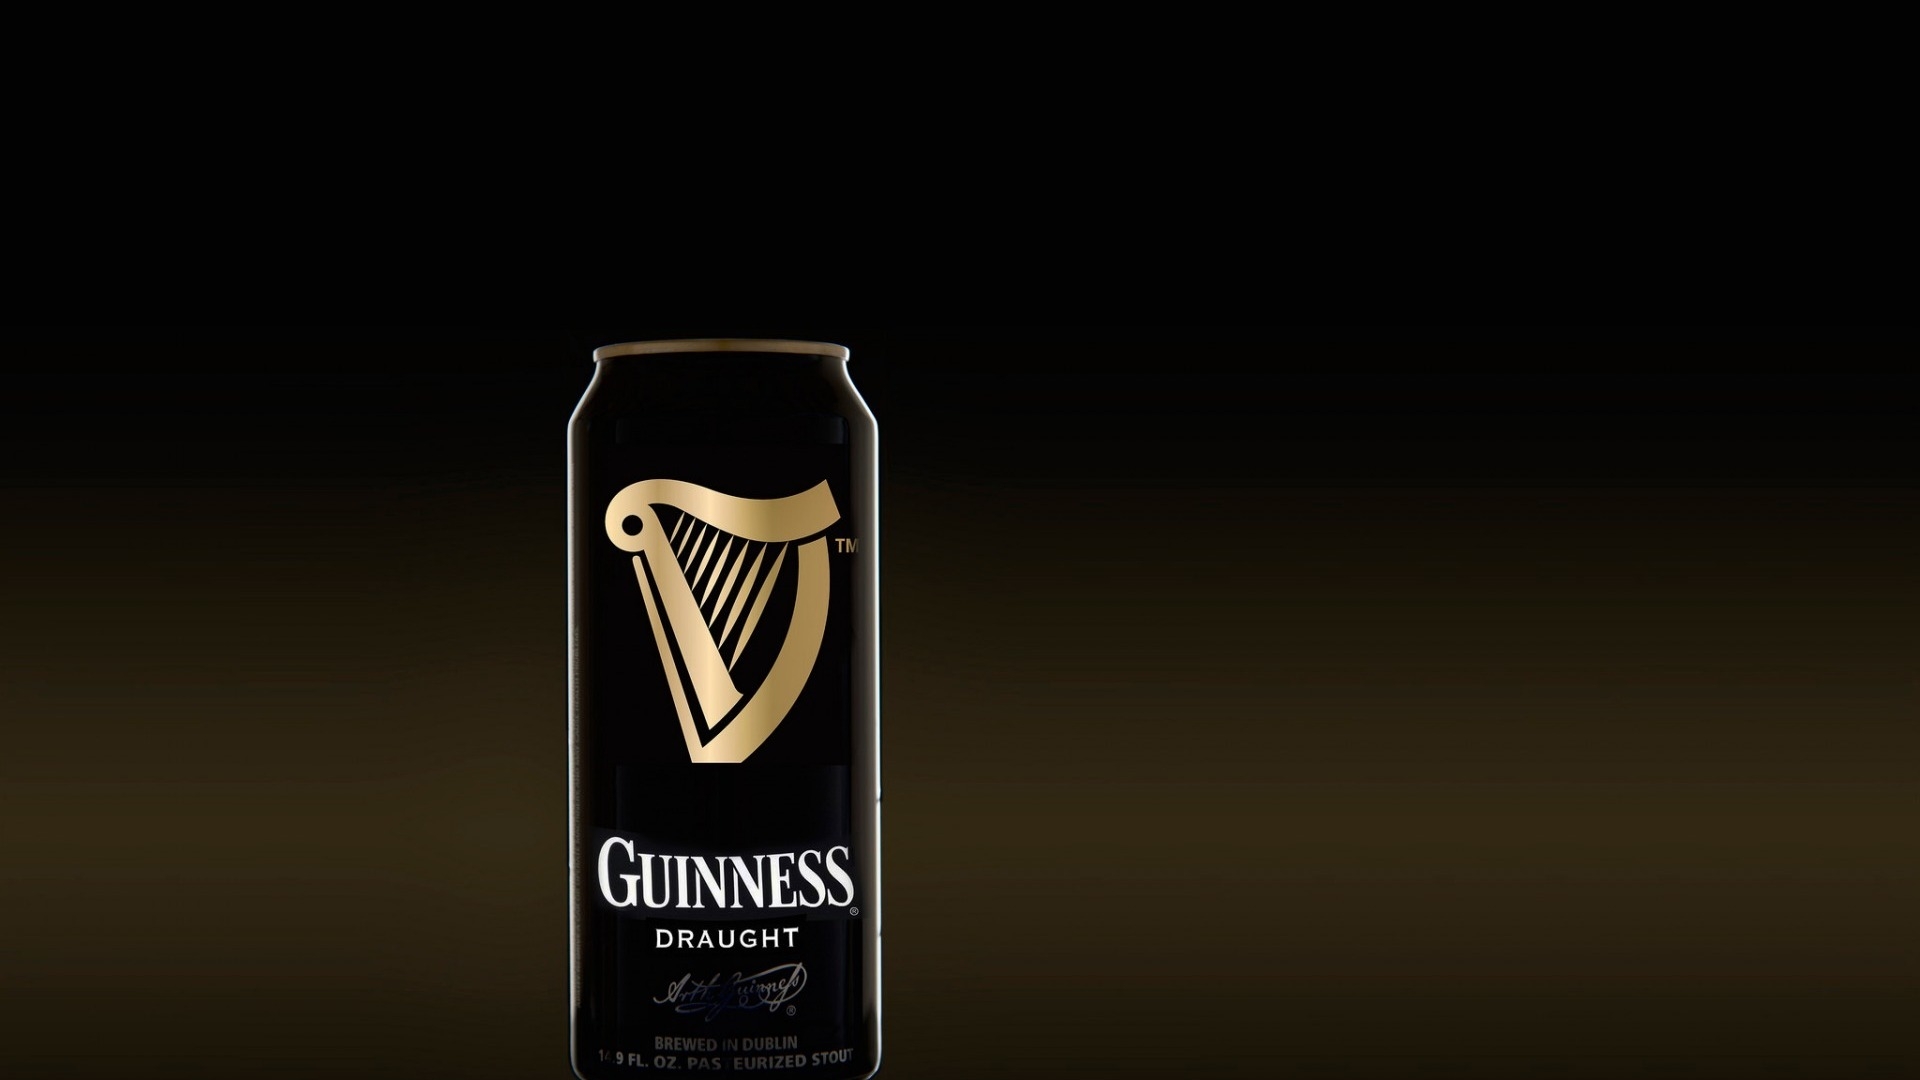 Guinness Beer Dose for 1920 x 1080 HDTV 1080p resolution